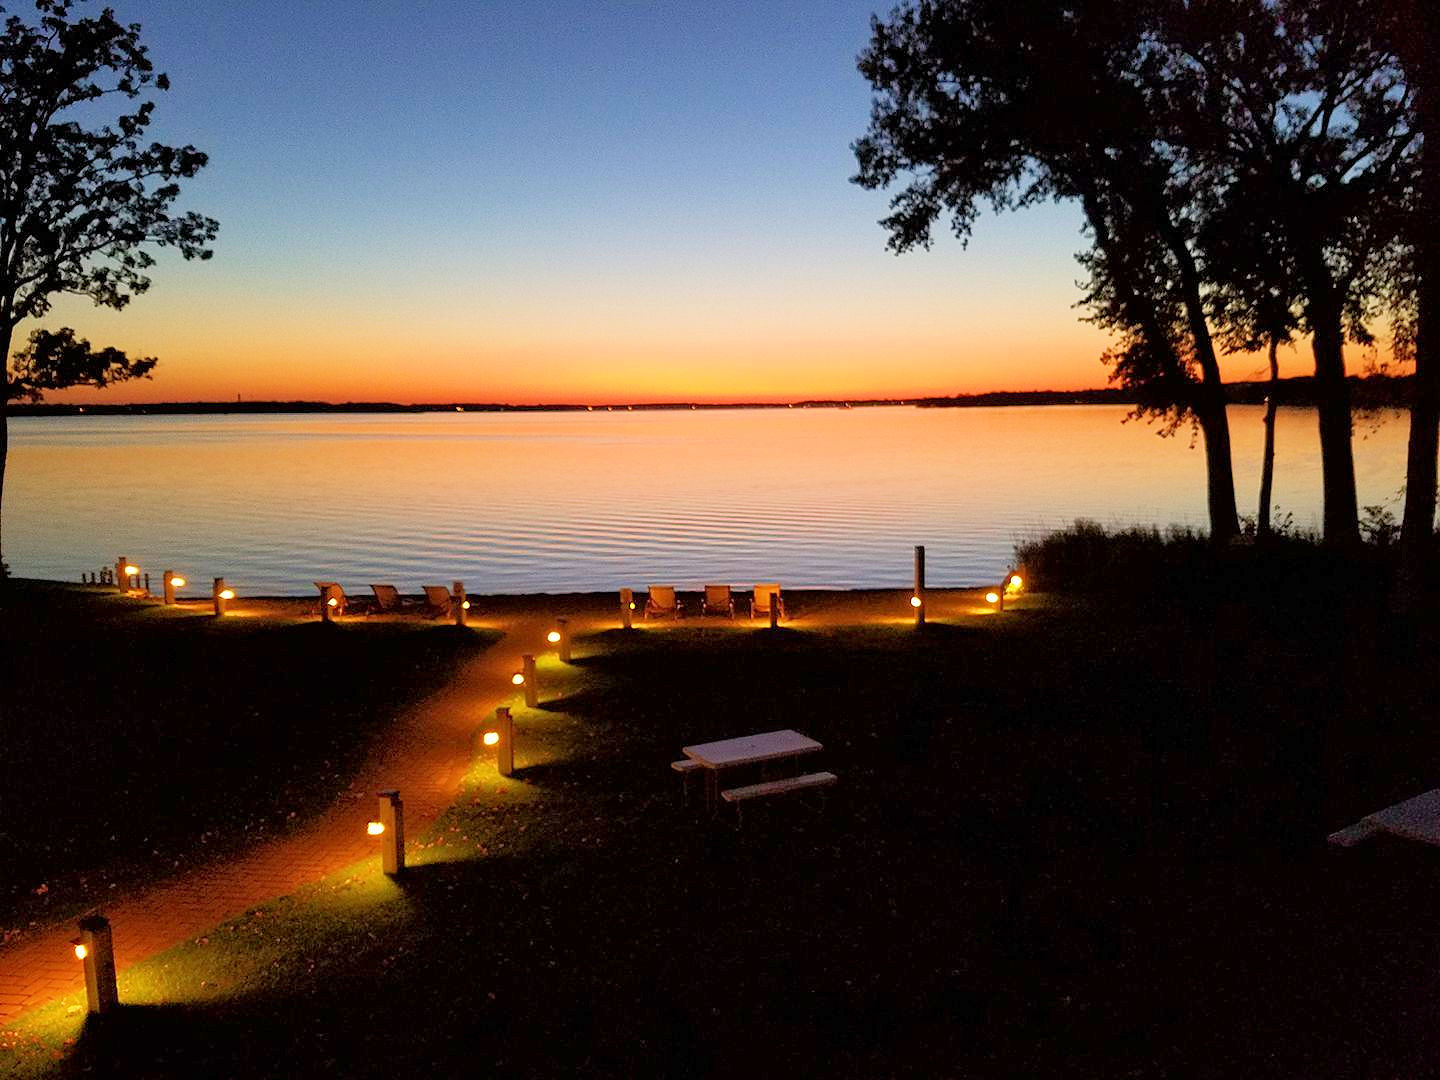 October 05, 2017 Big Detroit Lake Sunset at The Lodge on Lake Detroit